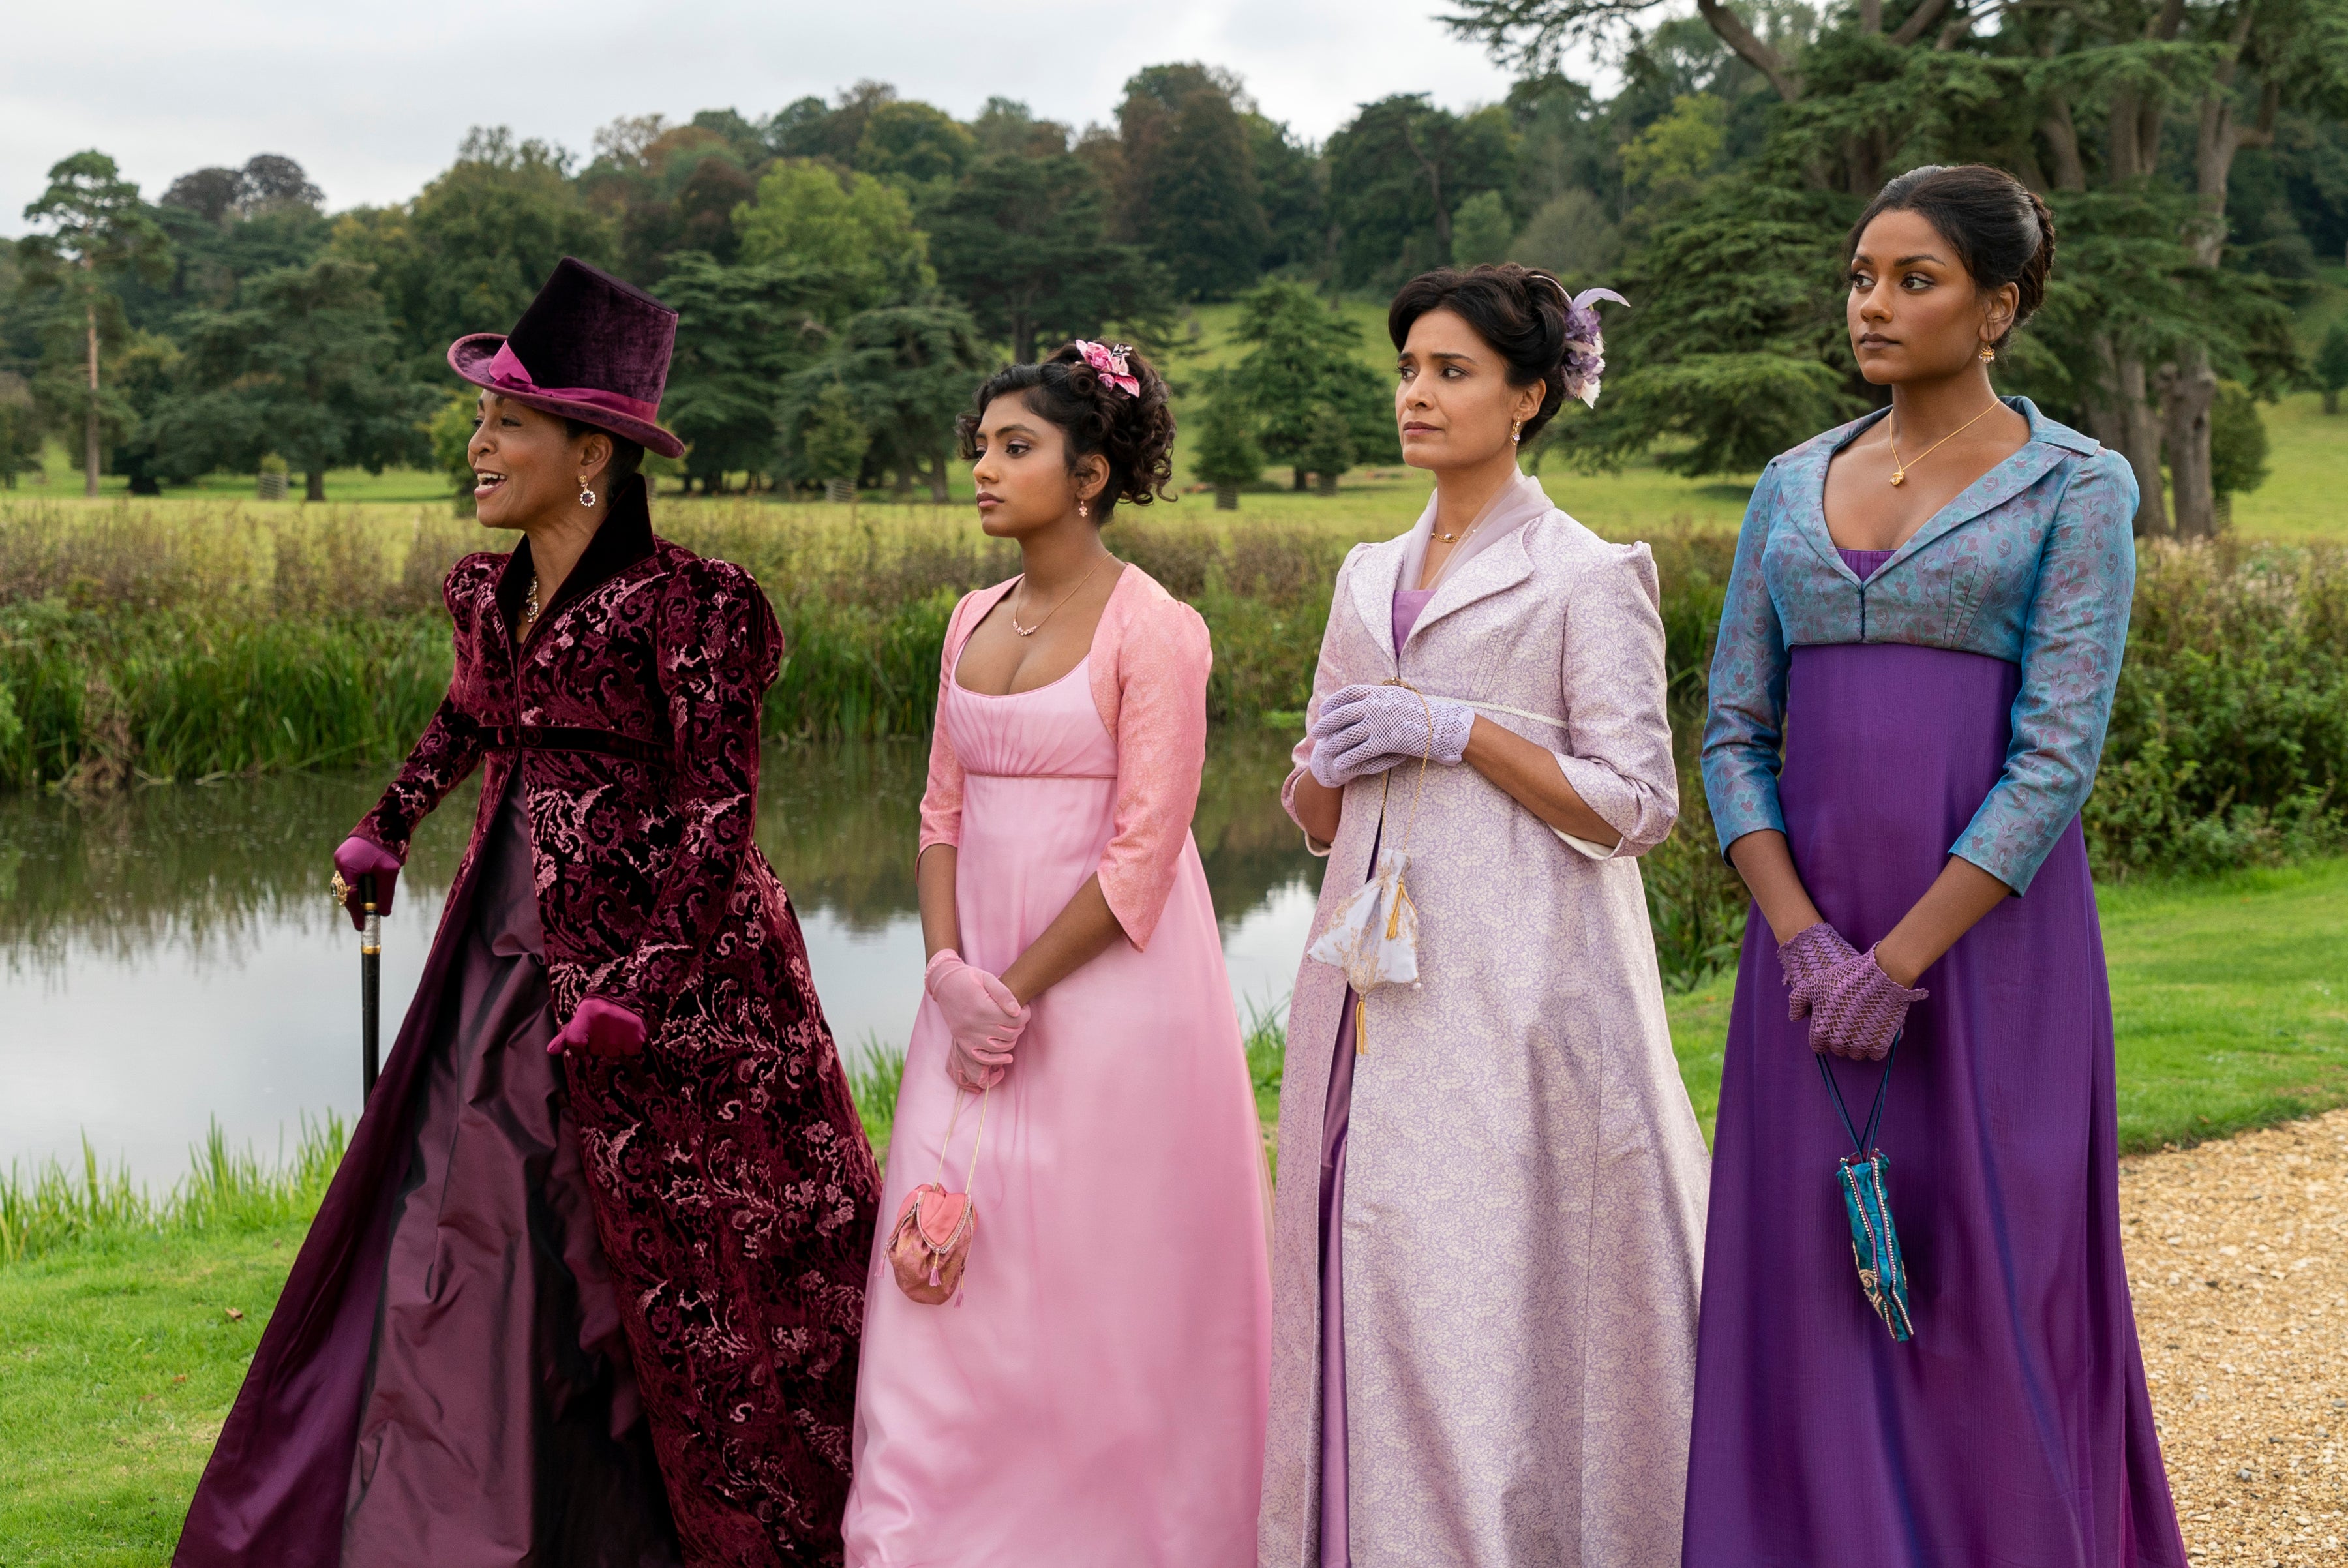 Adjoa Andoh as Lady Danbury, Charithra Chandran as Edwina Sharma, Shelley Conn as Mary Sharma, Simone Ashley as Kate Sharma in ‘Bridgerton’